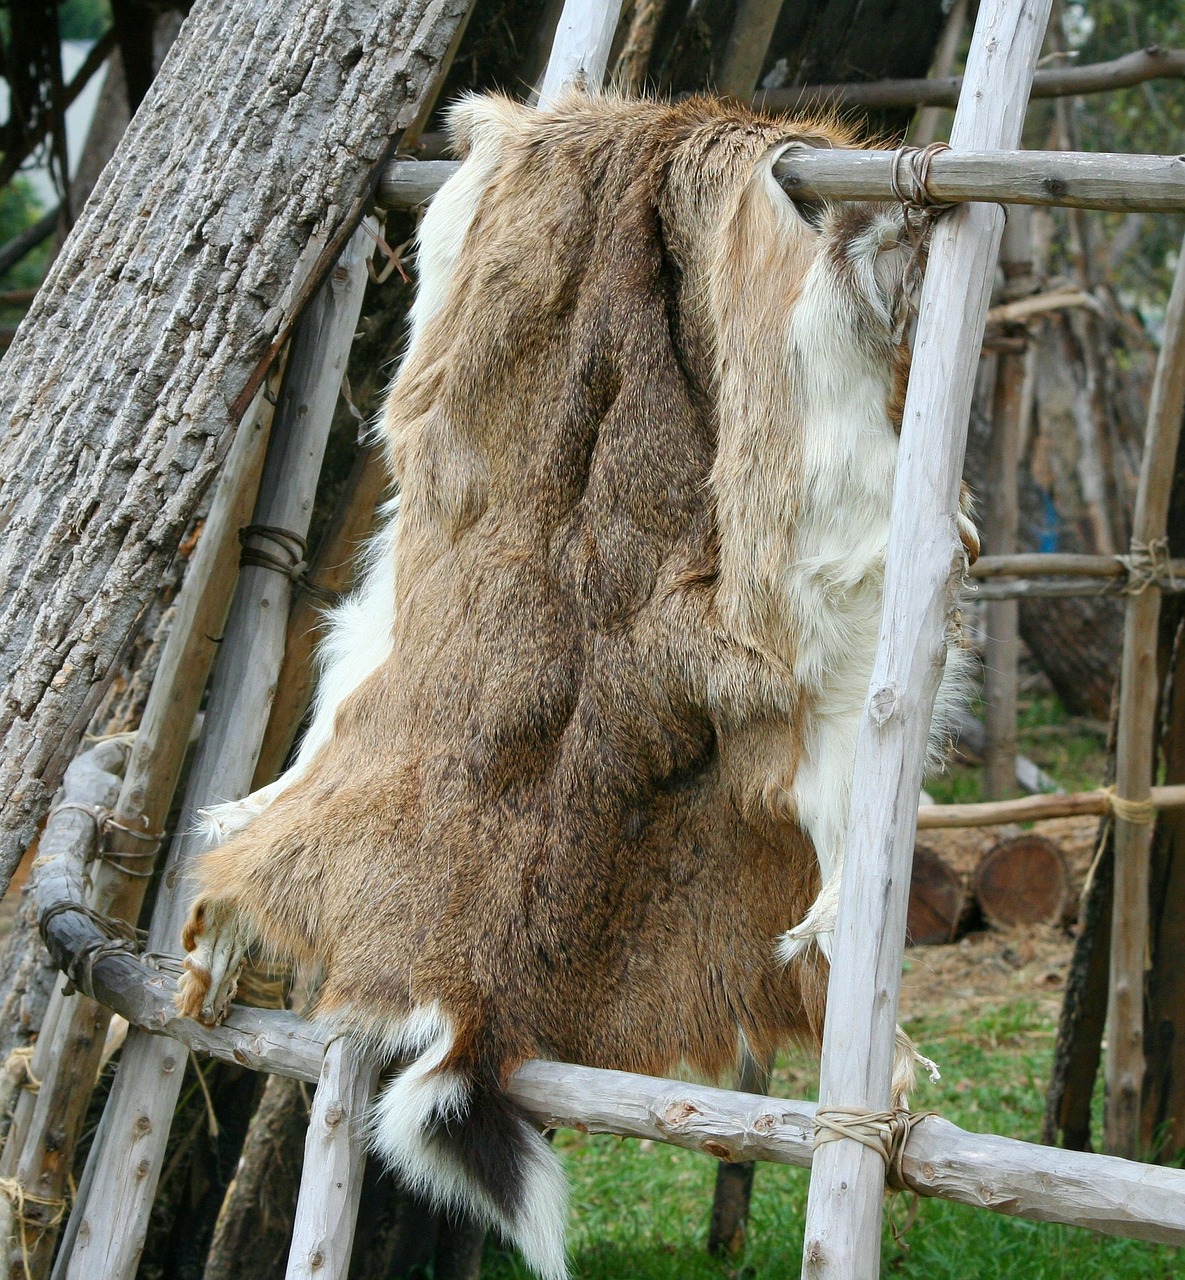 Deer hide,pelt,native american,fur,coat - free image from needpix.com